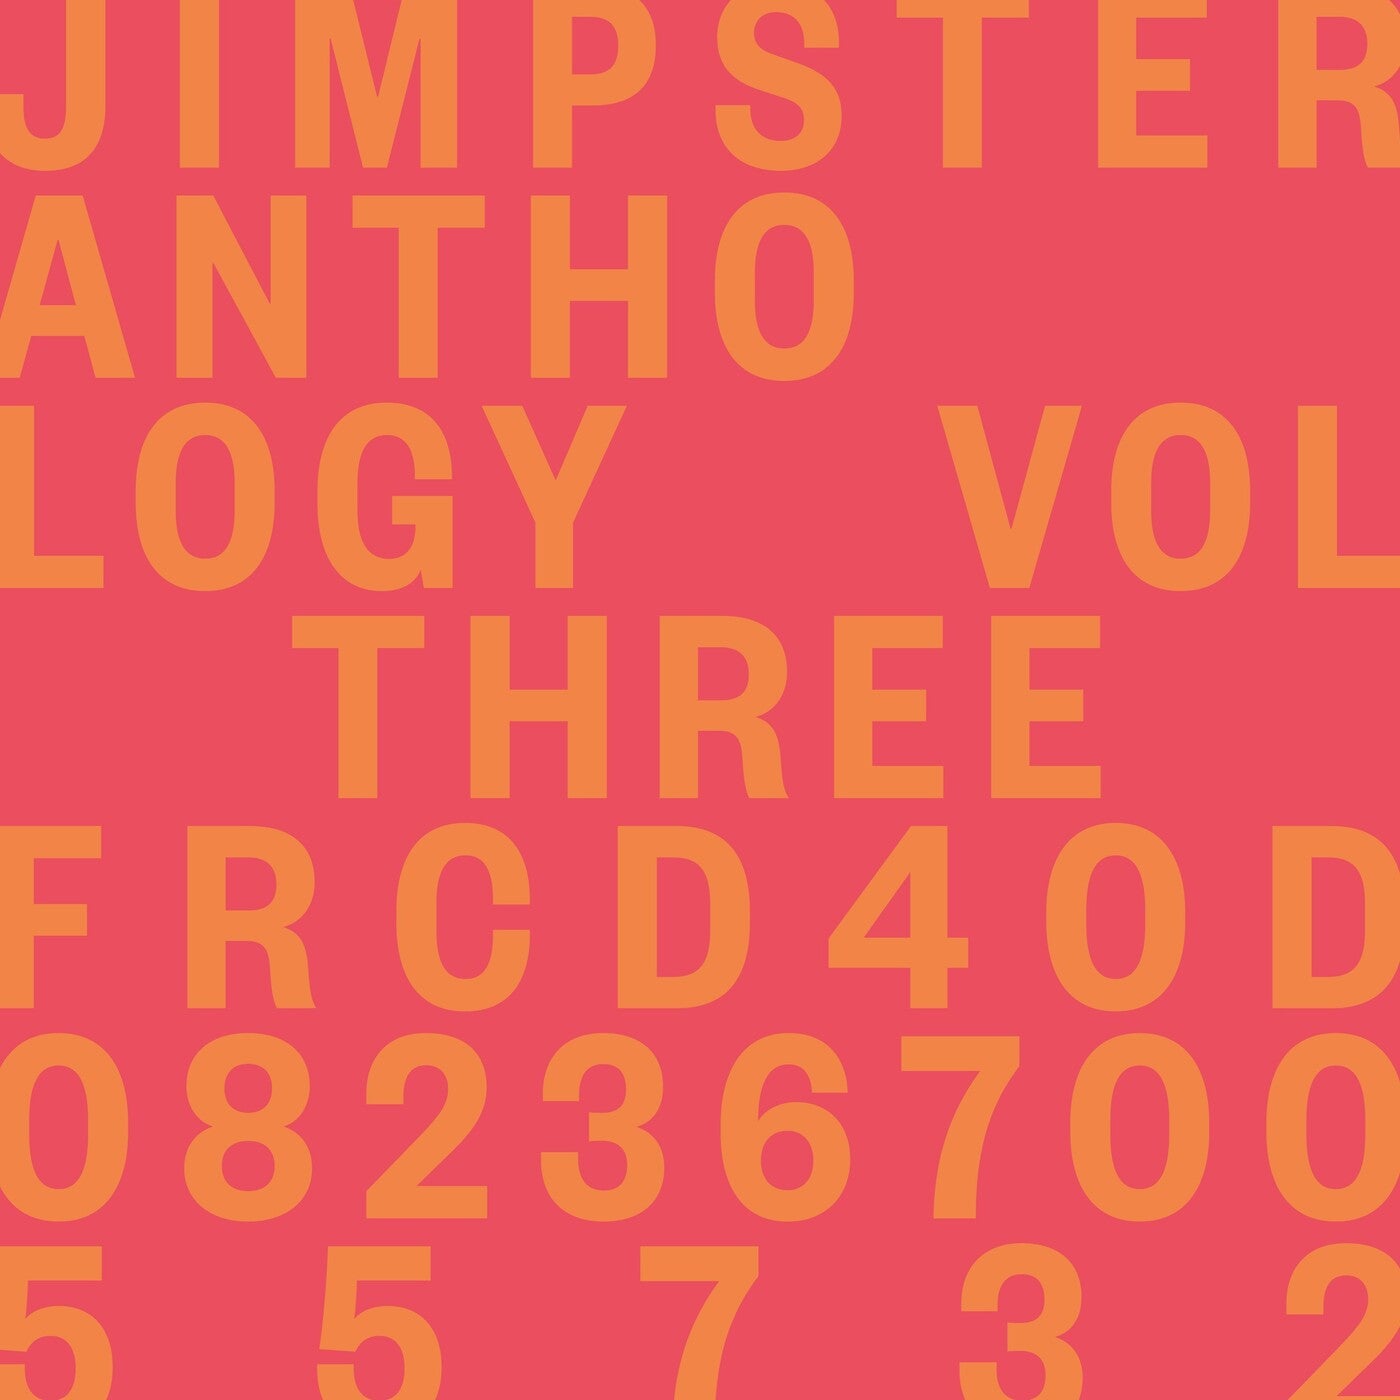 Jimpster - Anthology, Vol. Three [FRCD40D]